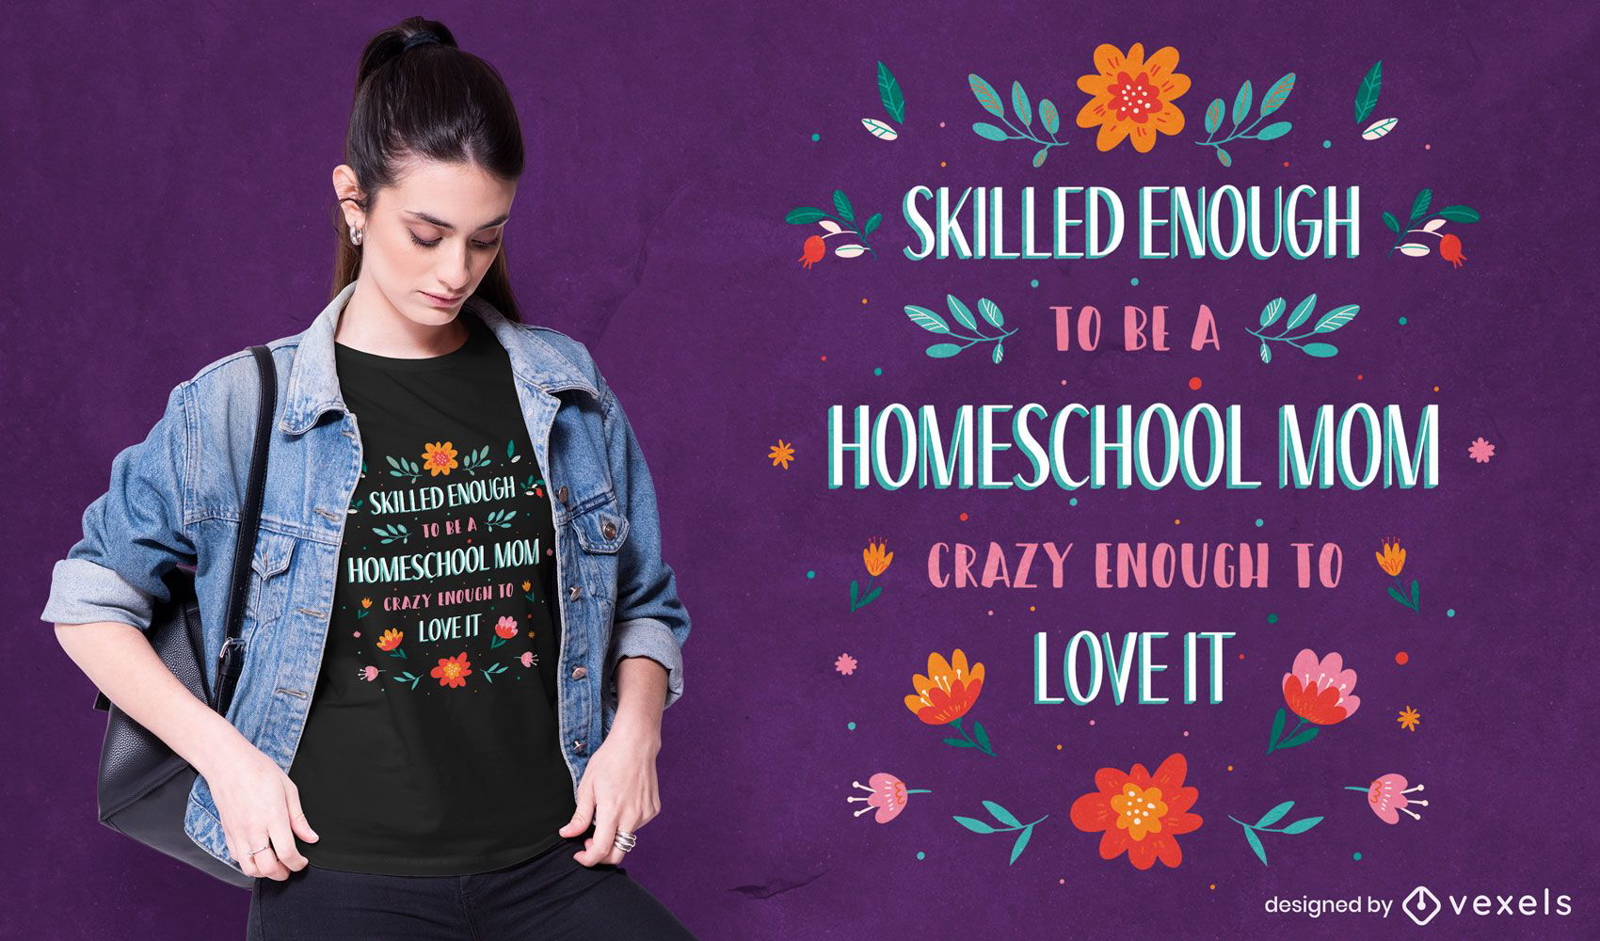 Homeschool mom t-shirt design